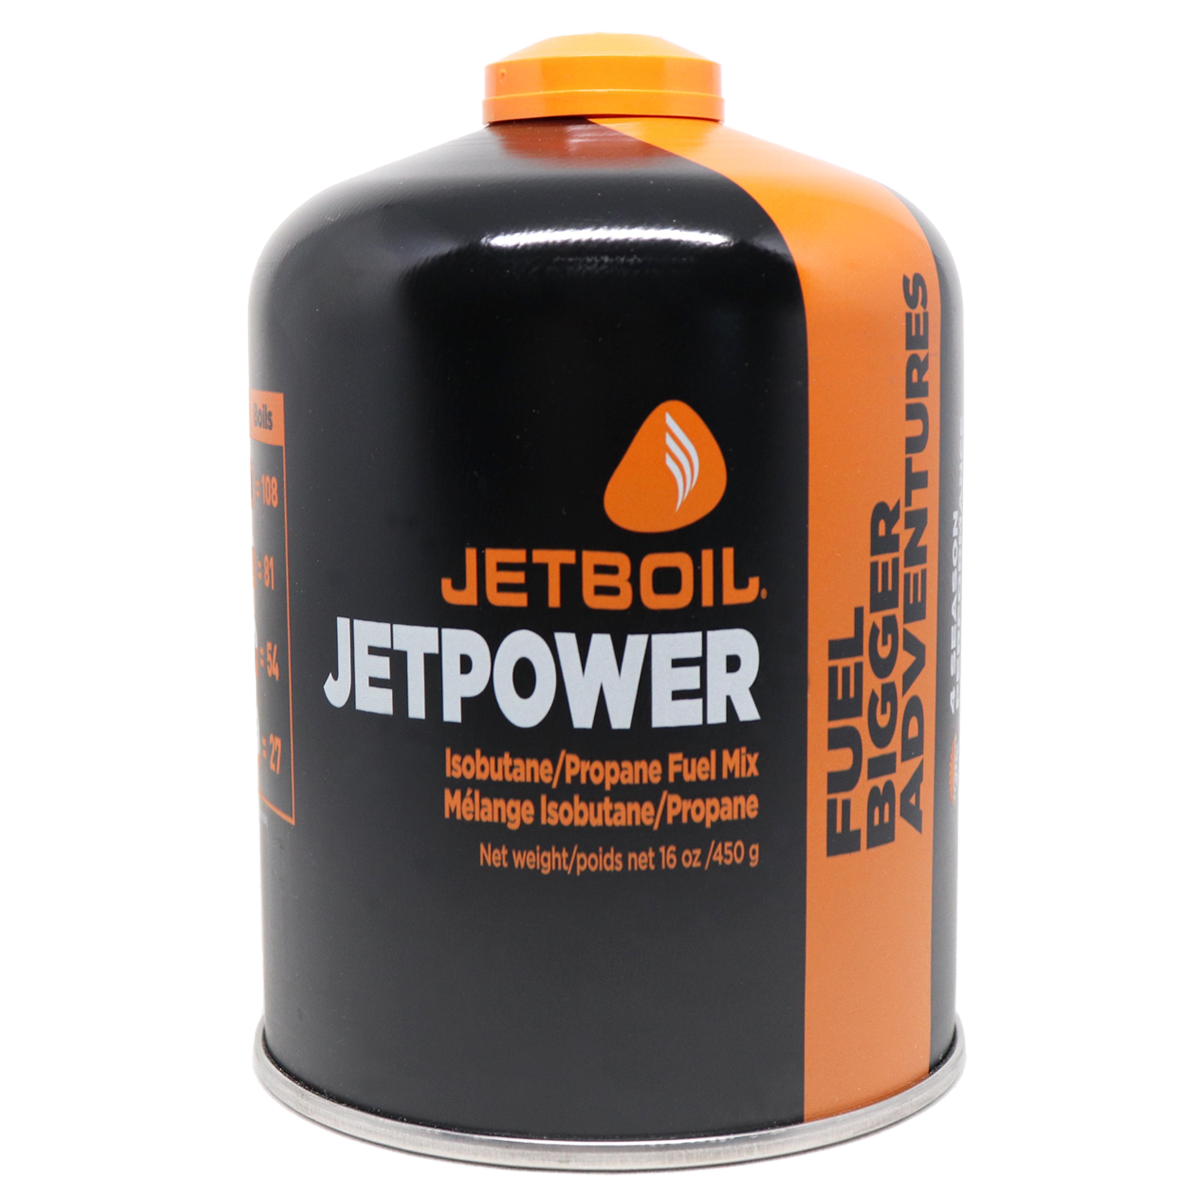 Jetboil Jetpower Fuel - Fuel cartridge